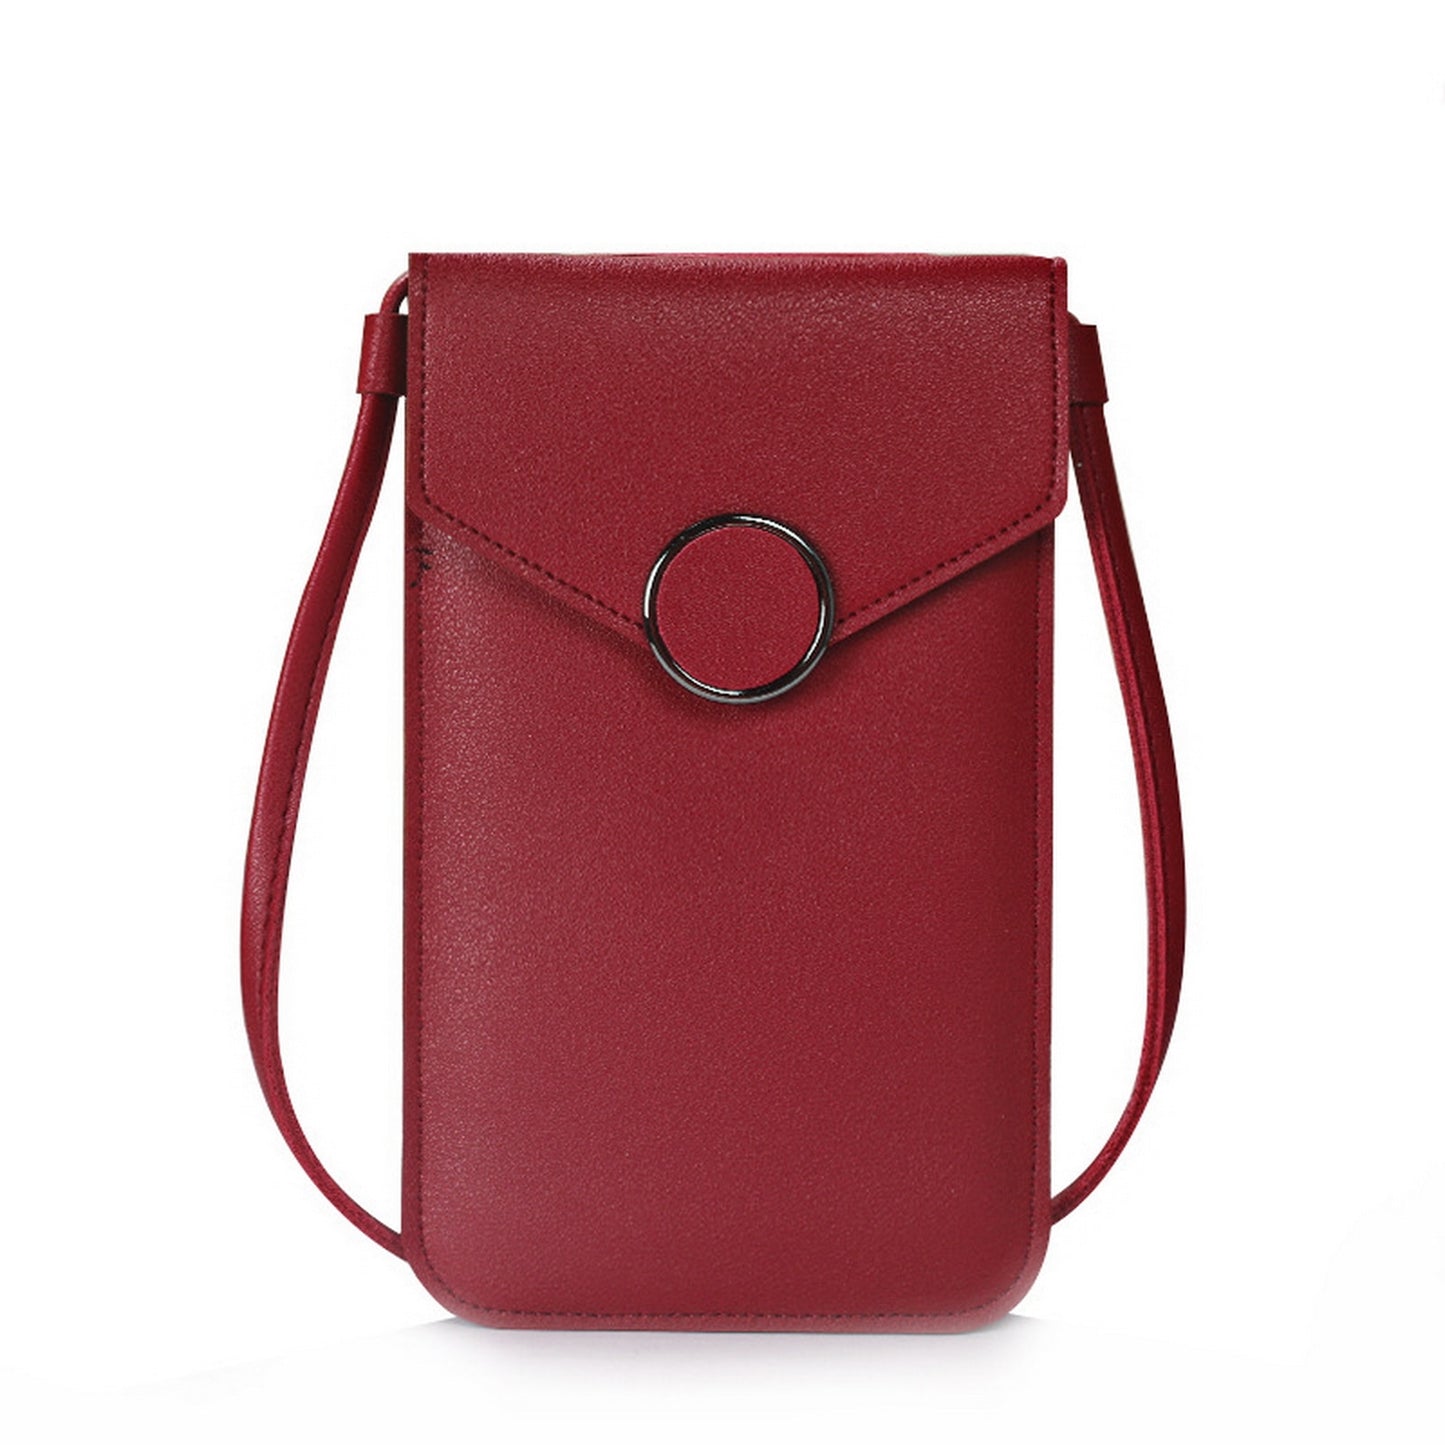 Touch Screen Cell Phone Purse Smartphone Wallet Leather Shoulder Strap Handbag Women Bag For Iphone Wallet Shoulder Bags